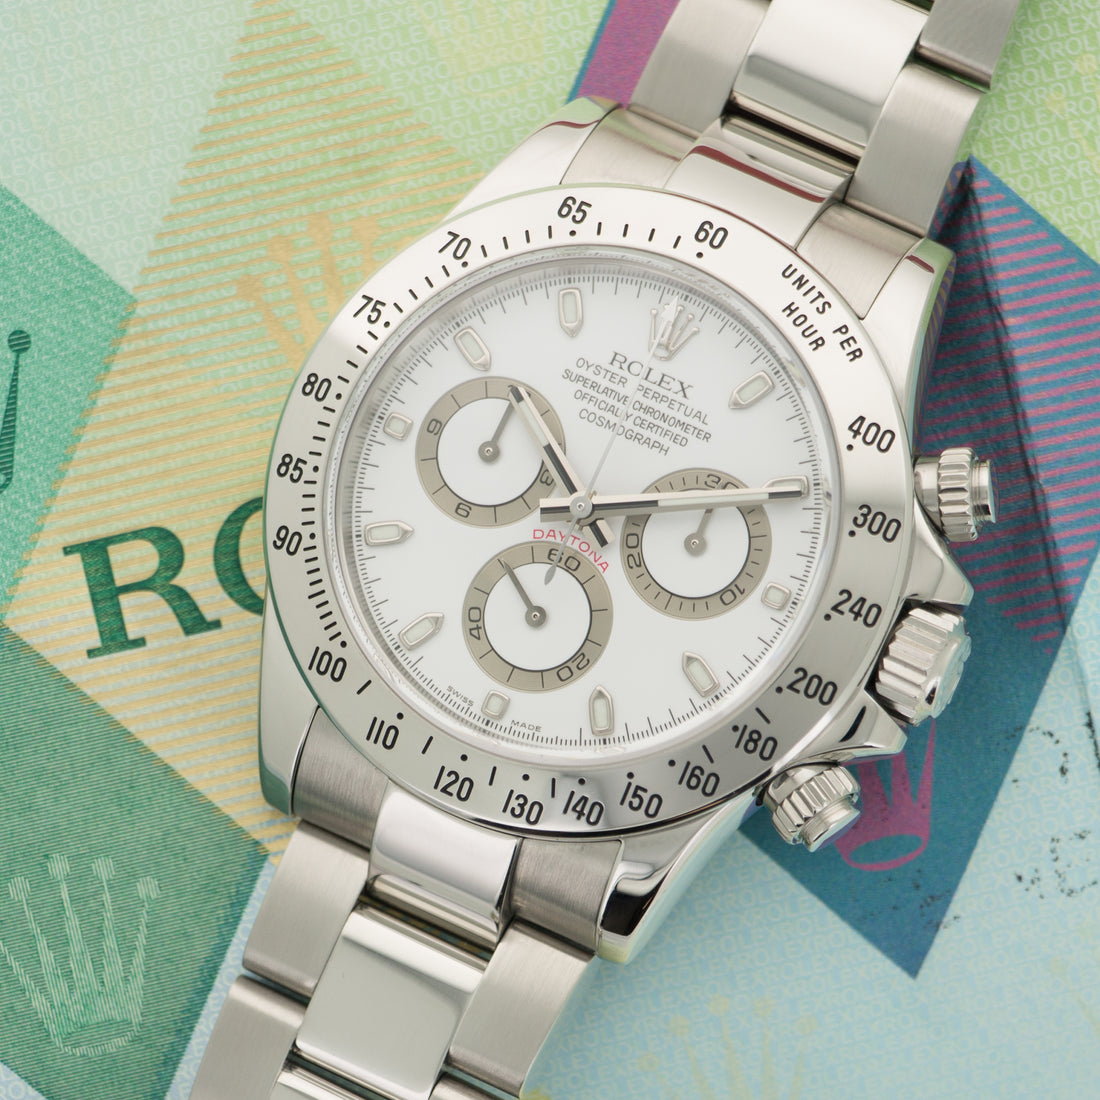 Rolex Stainless Steel Cosmograph Daytona Watch Ref. 116520